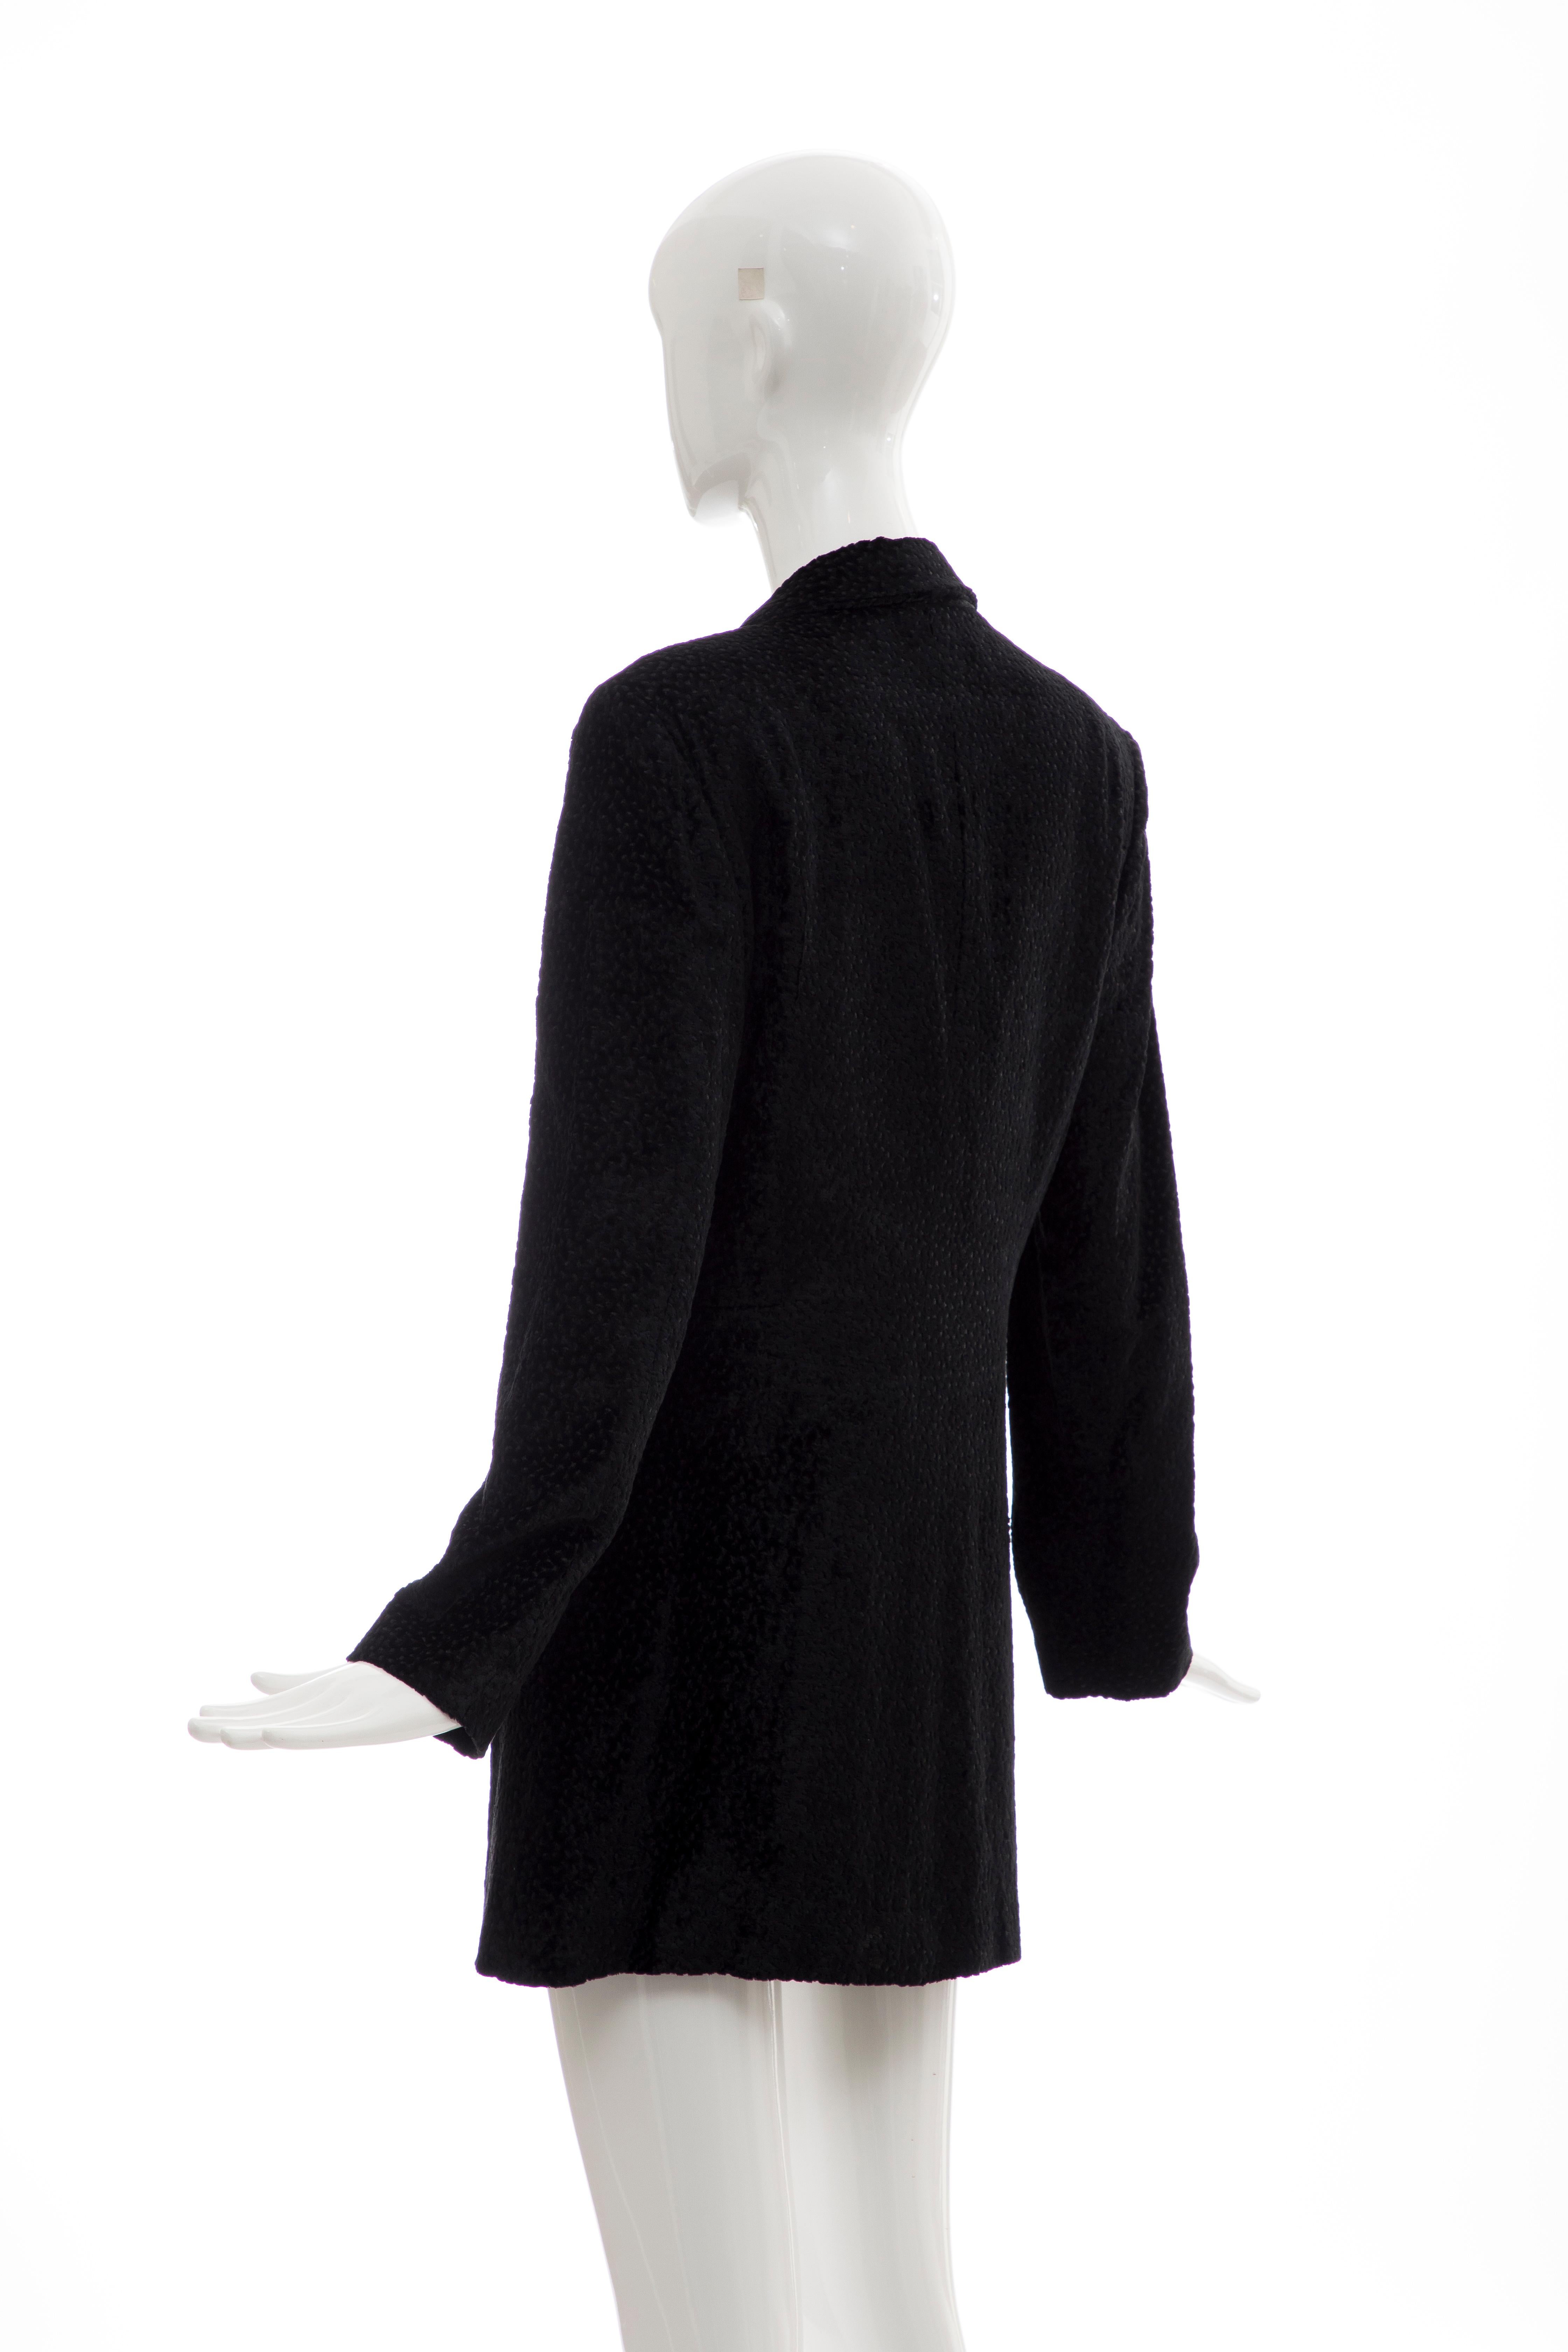 Salvatore Ferragamo Black Flecked Velvet Blazer, Circa: 1990's For Sale 4